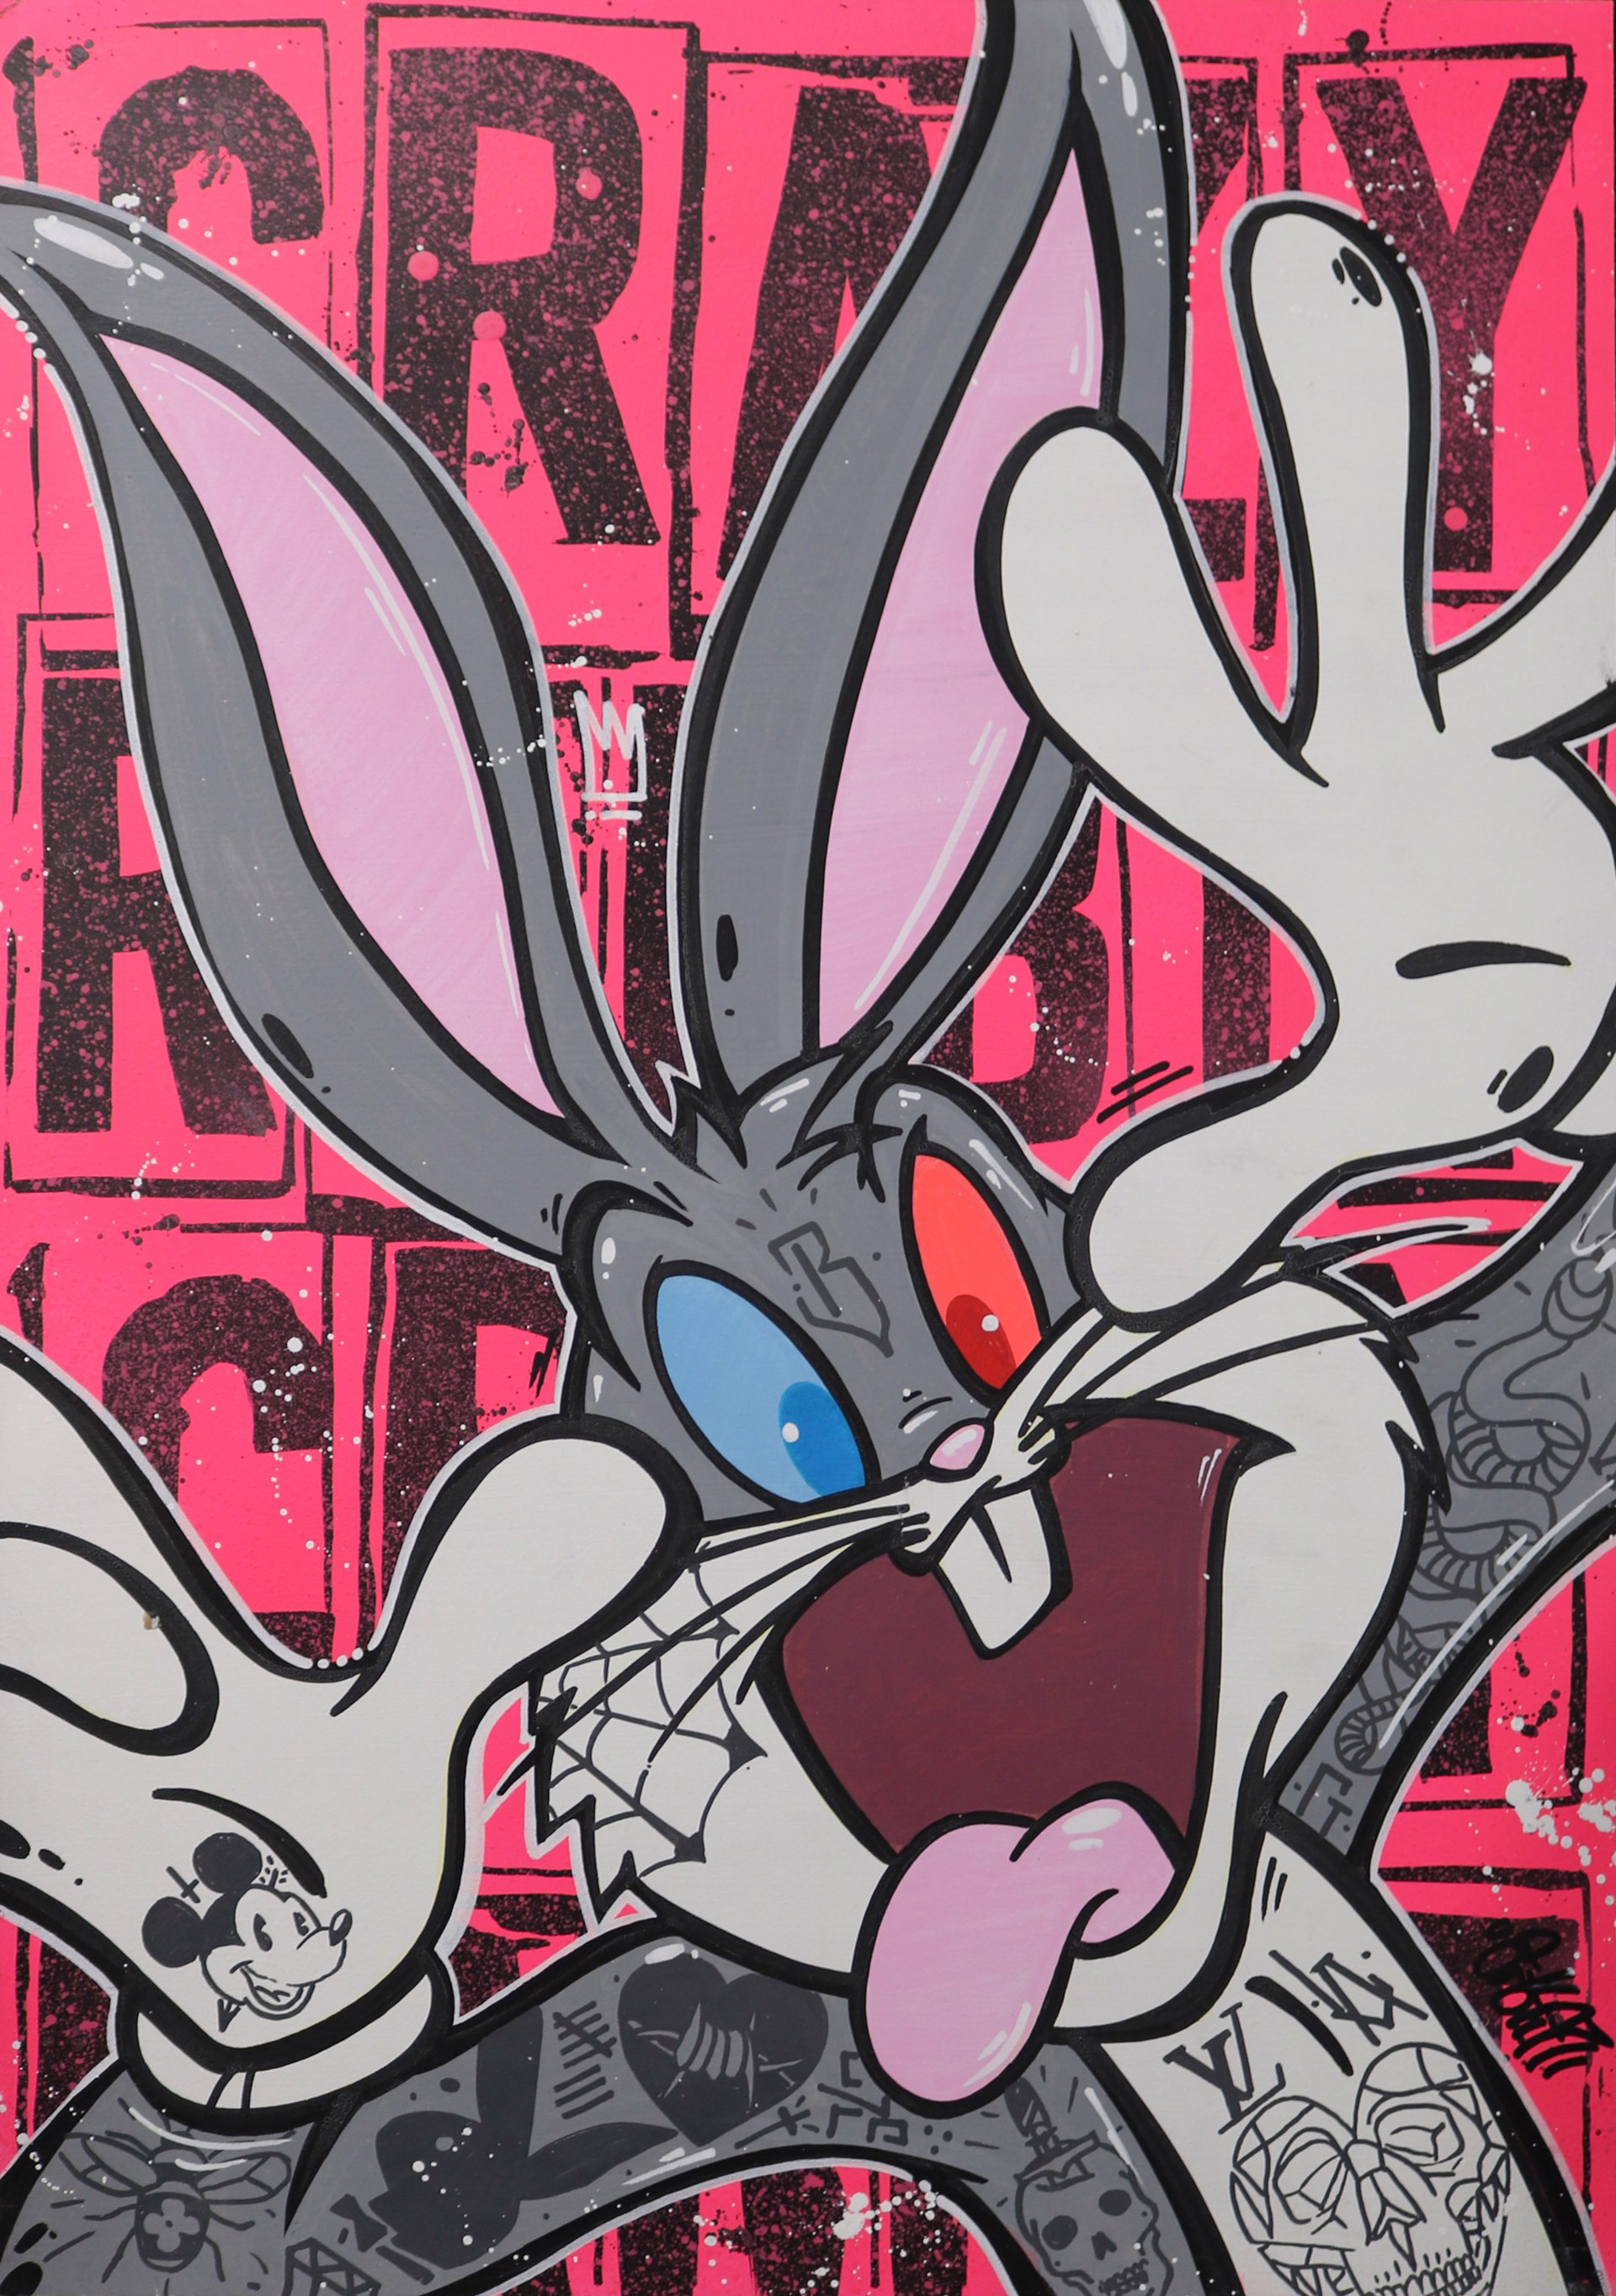 Crazy Rabbit by Opake One